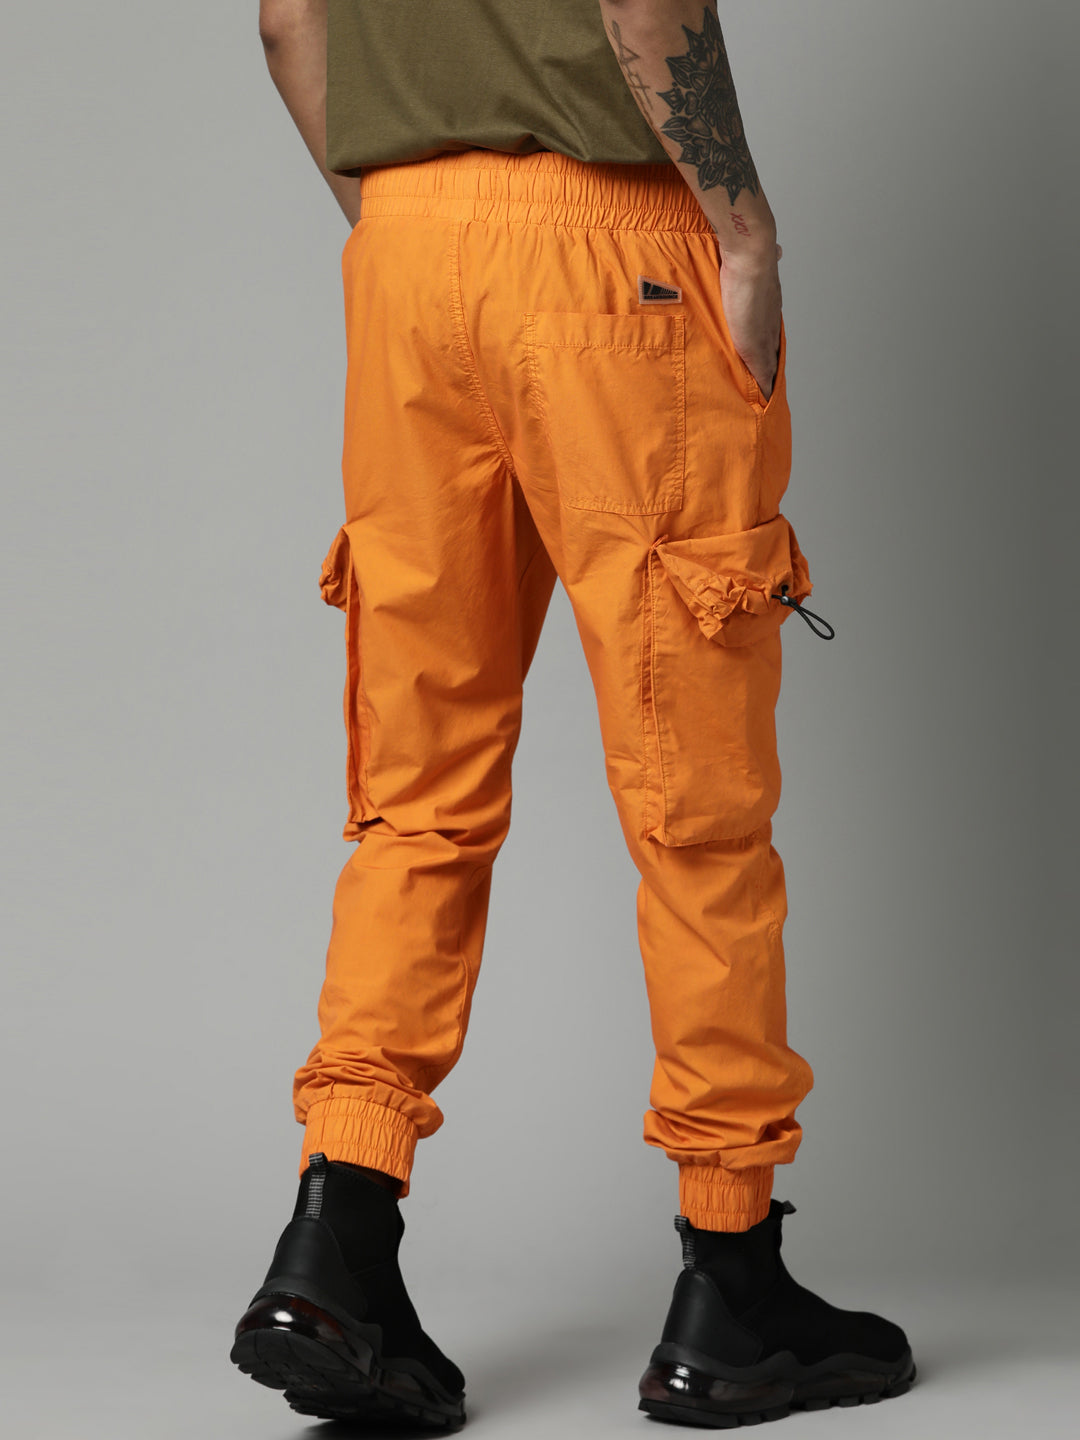 kryc Men's 60s Bell Bottom Pants Orange - Orange XL